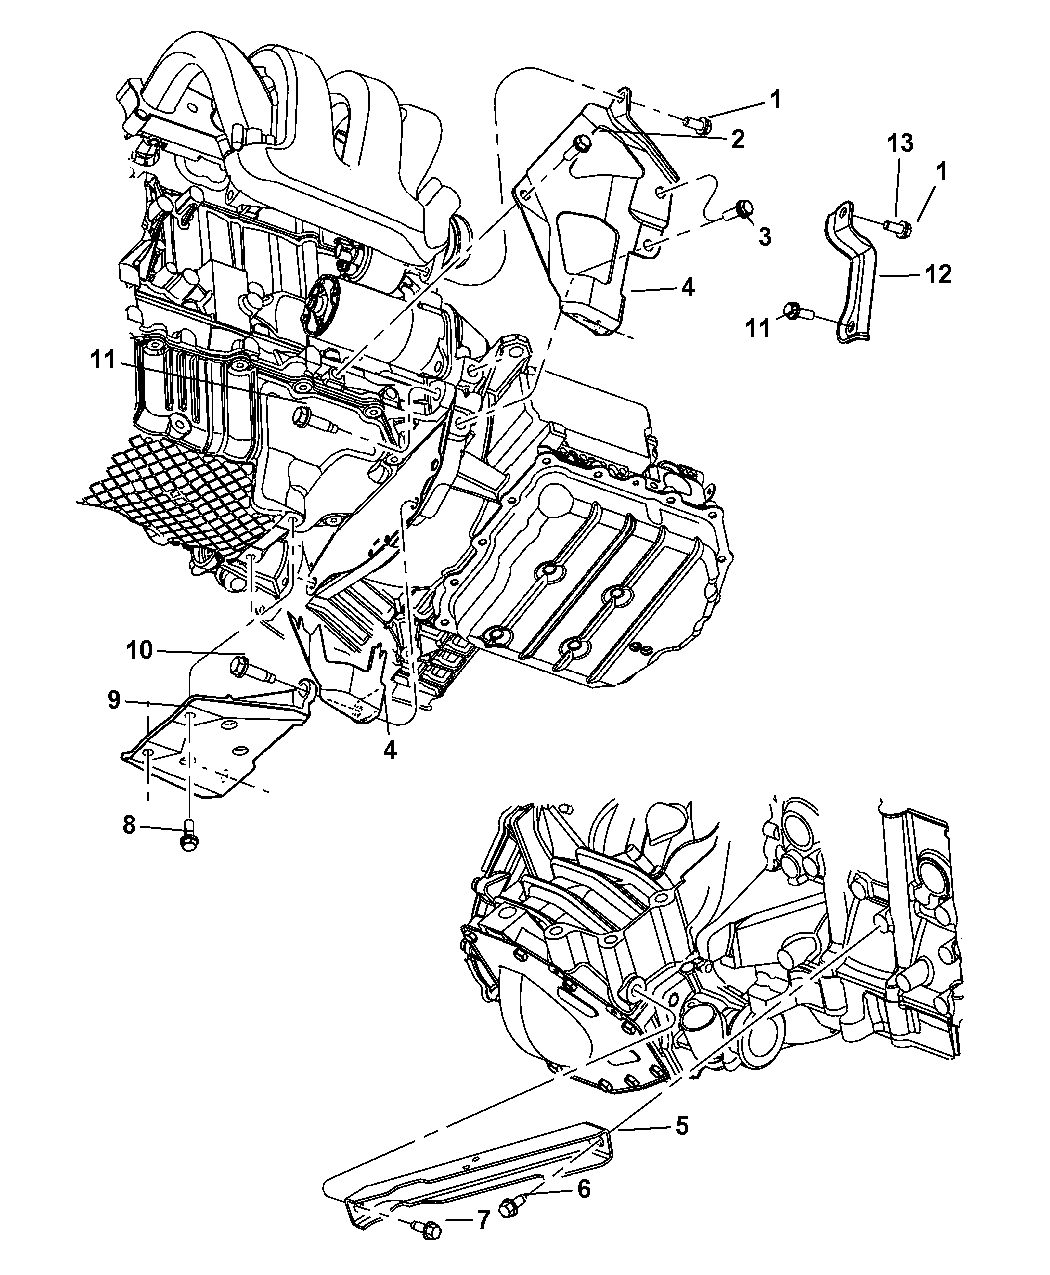 2003 Dodge Neon Engine Diagram - Cars Wiring Diagram